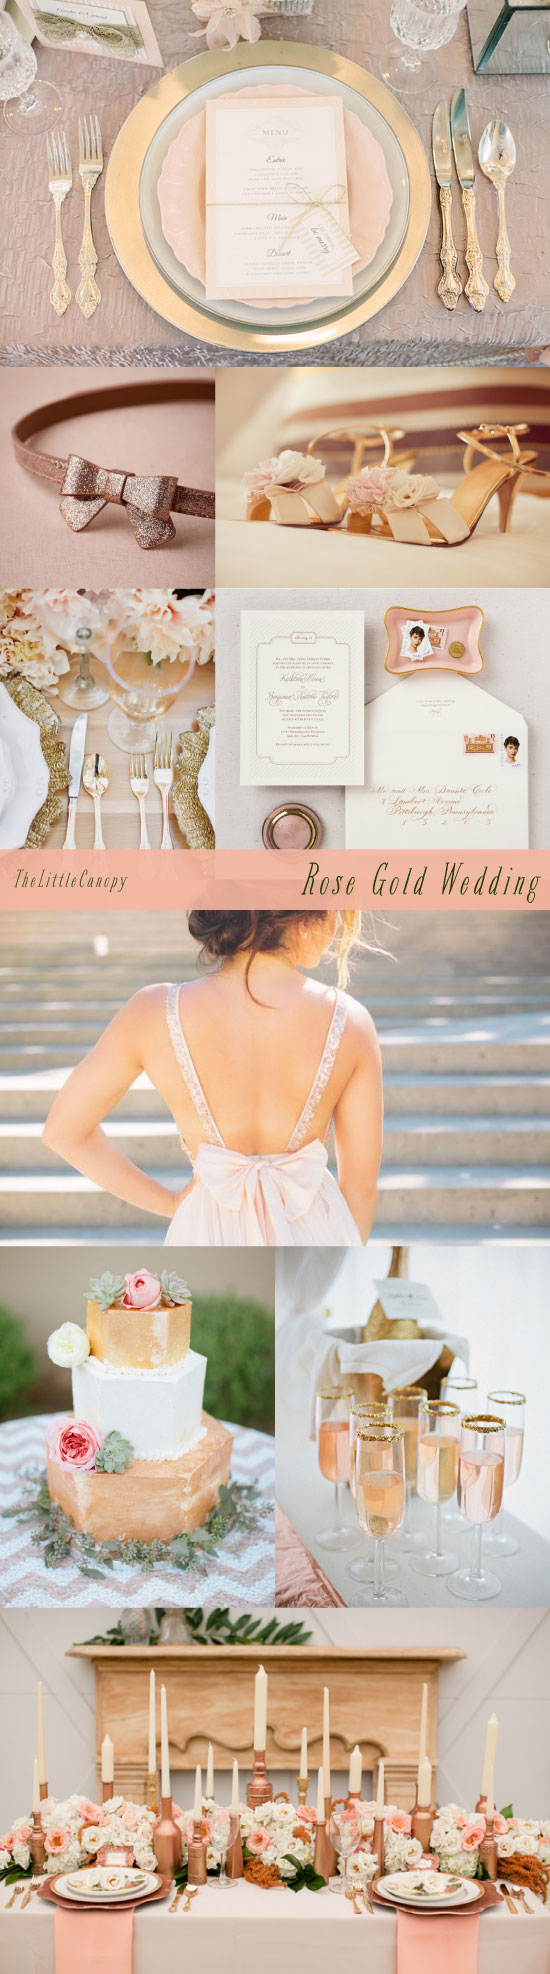 Rose Gold Theme Wedding Inspiration Board